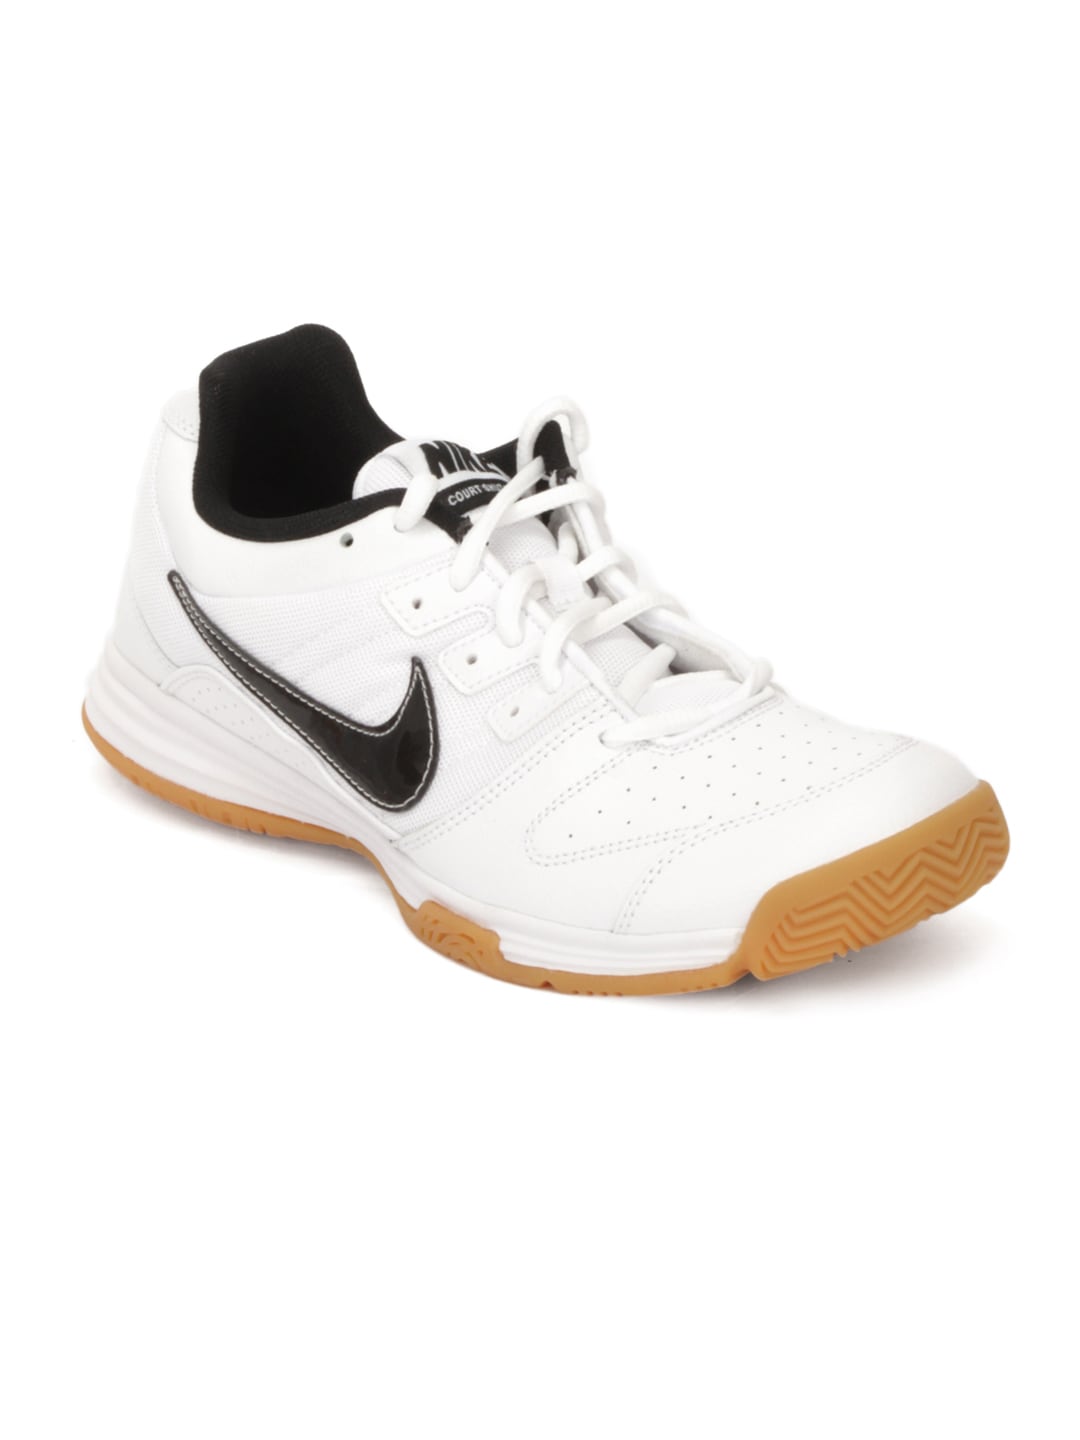 Nike Men Court Shuttle White Sports Shoes